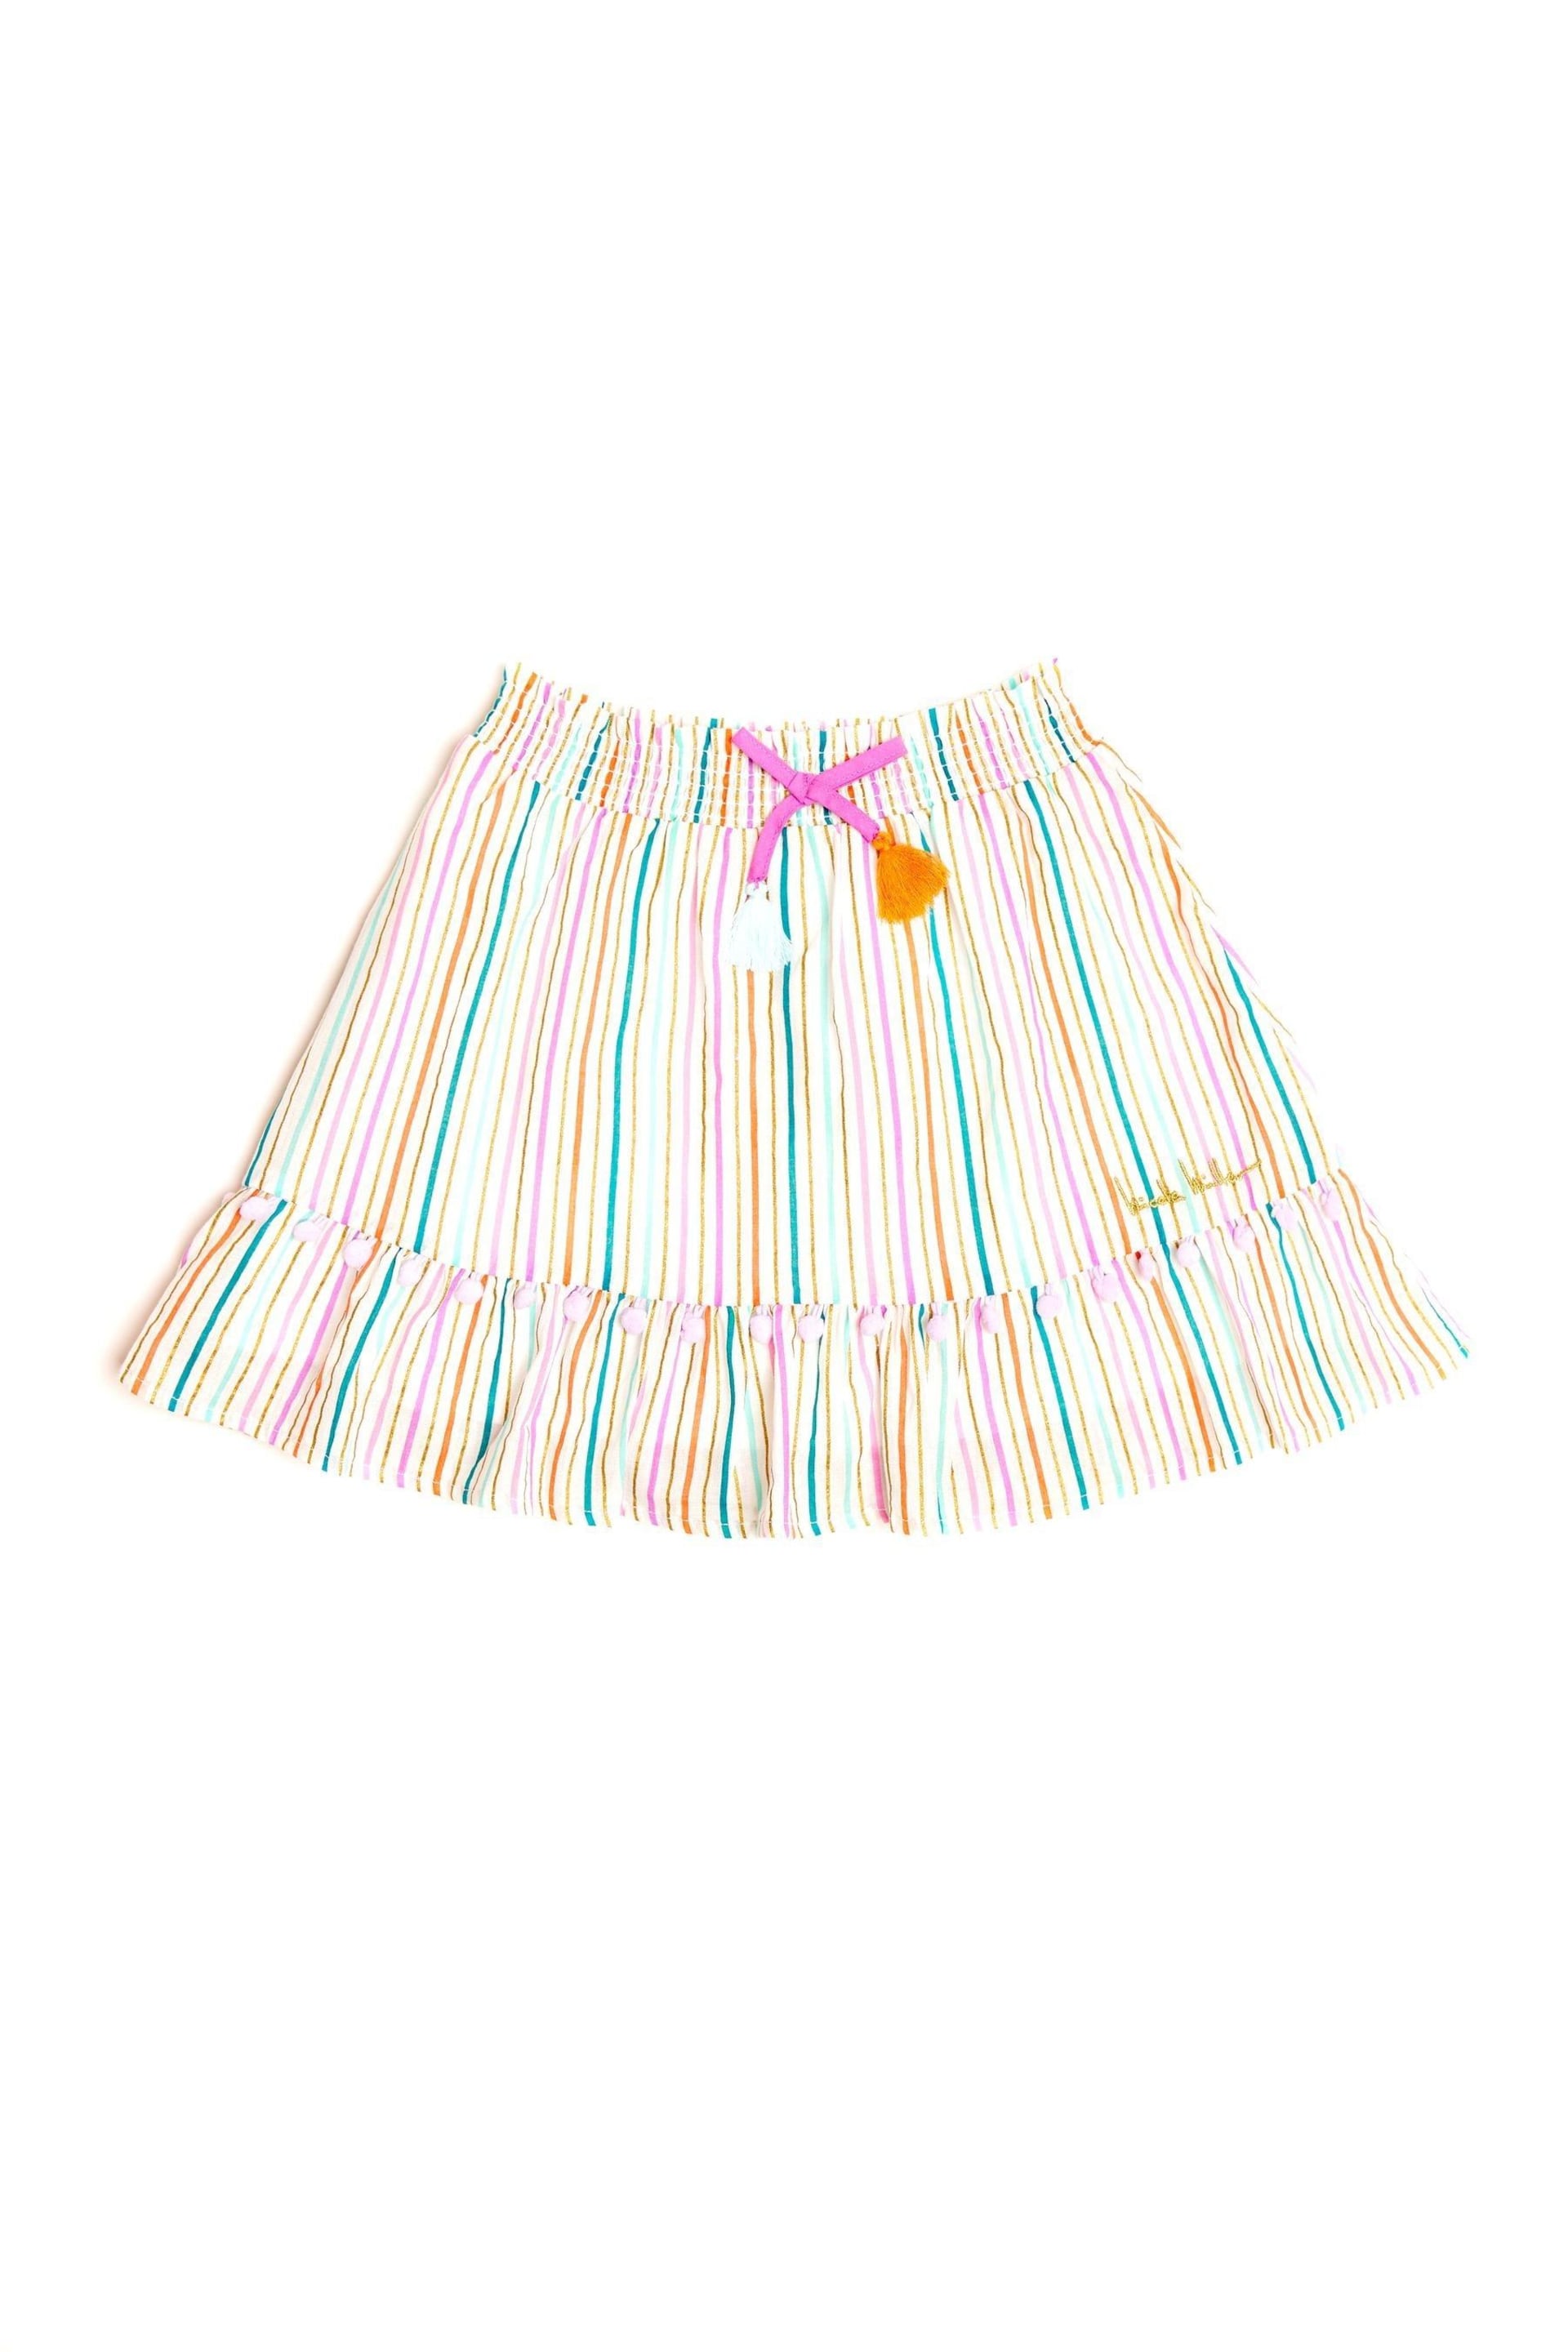 Nicole Miller Striped Cotton Multi Skirt - Image 1 of 4